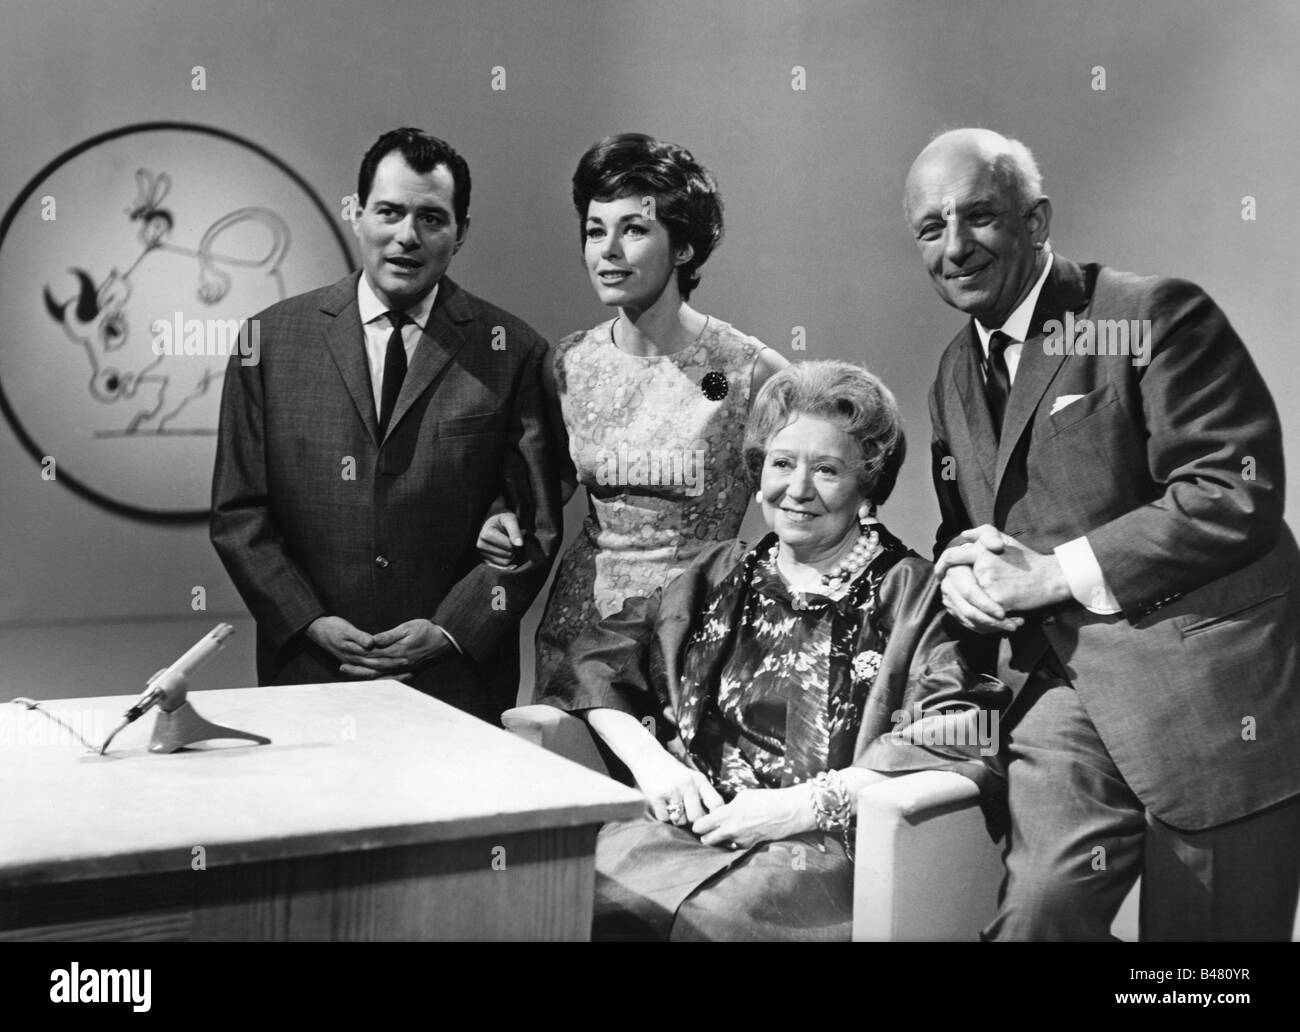 Koch, Marianne, * 19.8.1931, German actress, half length, with Sammy Drechsel, Gertrud 'Trude' Hesterberg and Werner Finck, TV show 'Steht's in den Sternen', SWF, 13.5.1964, Stock Photo